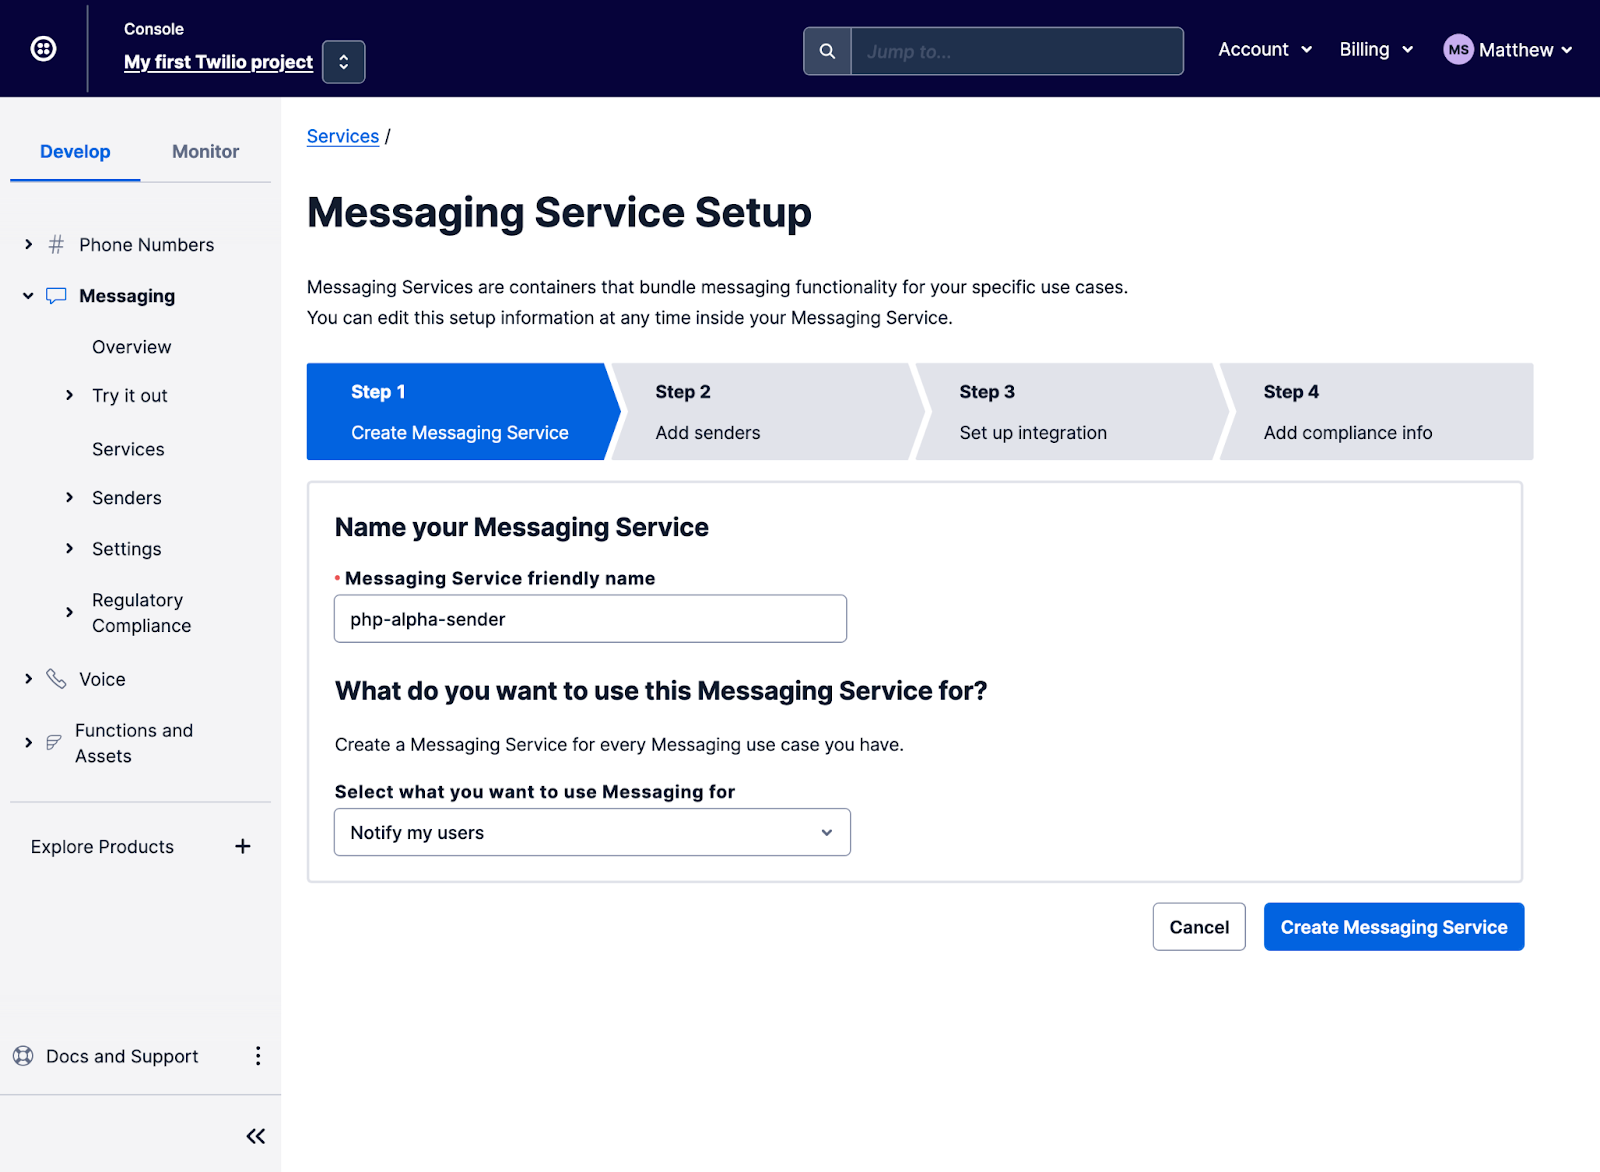 Messaging Service Setup - Step 1.